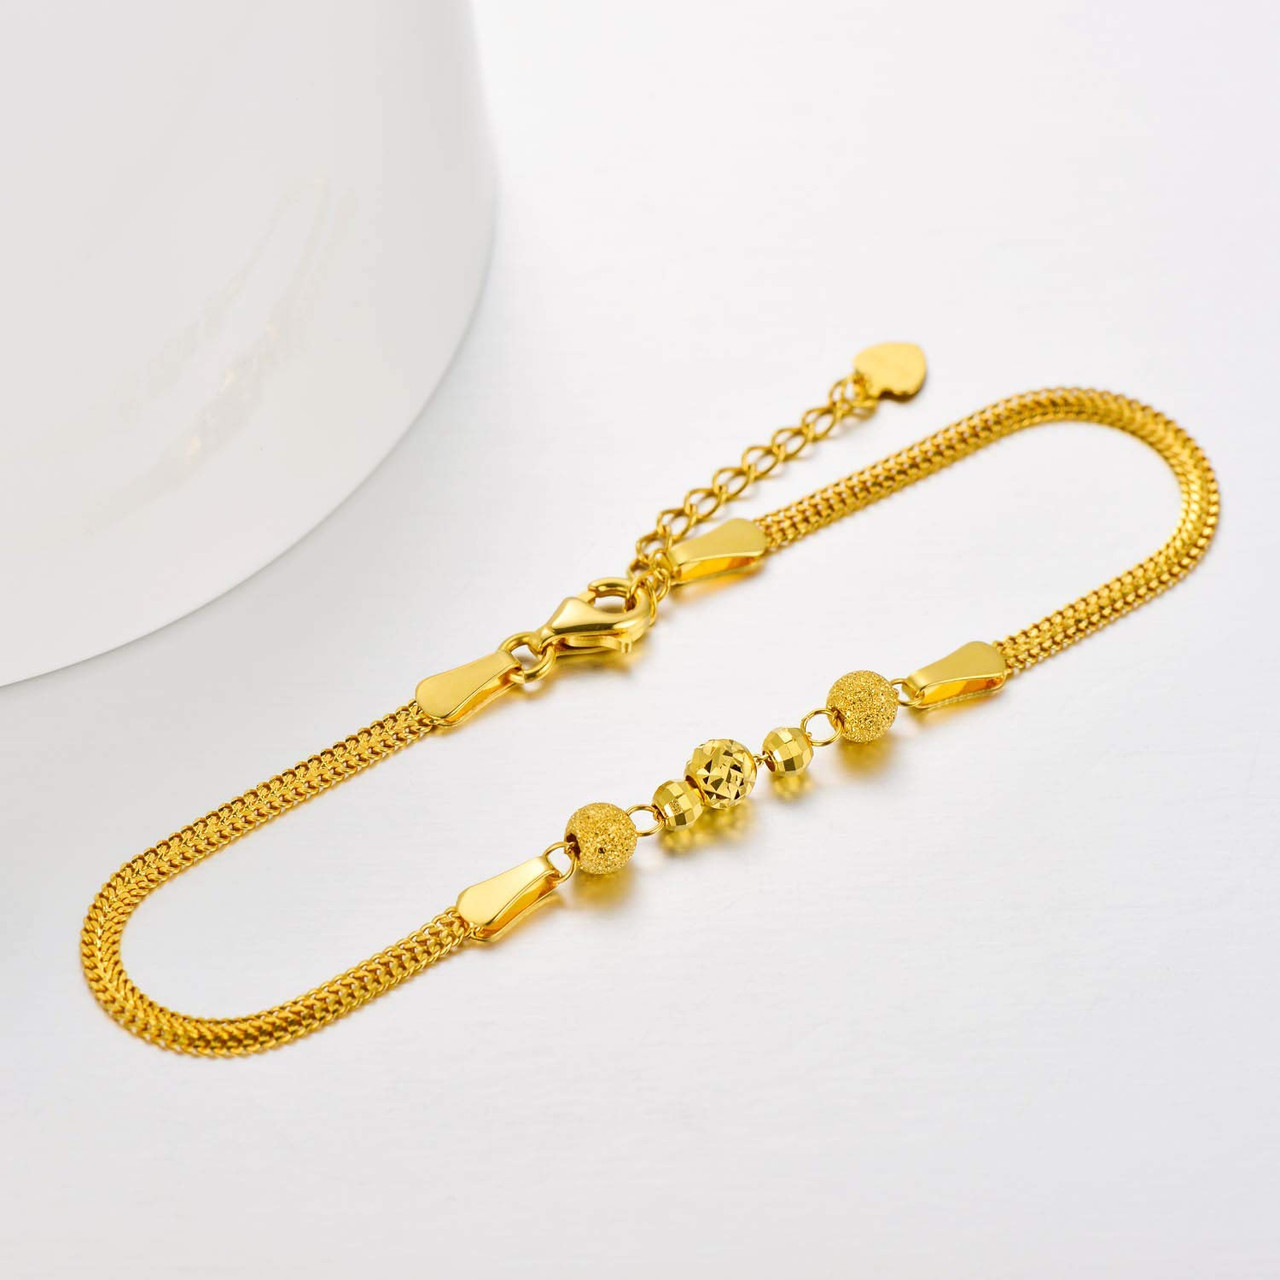 Louis Vuitton Empreinte 18K Yellow Gold Bangle Size Medium 16 at